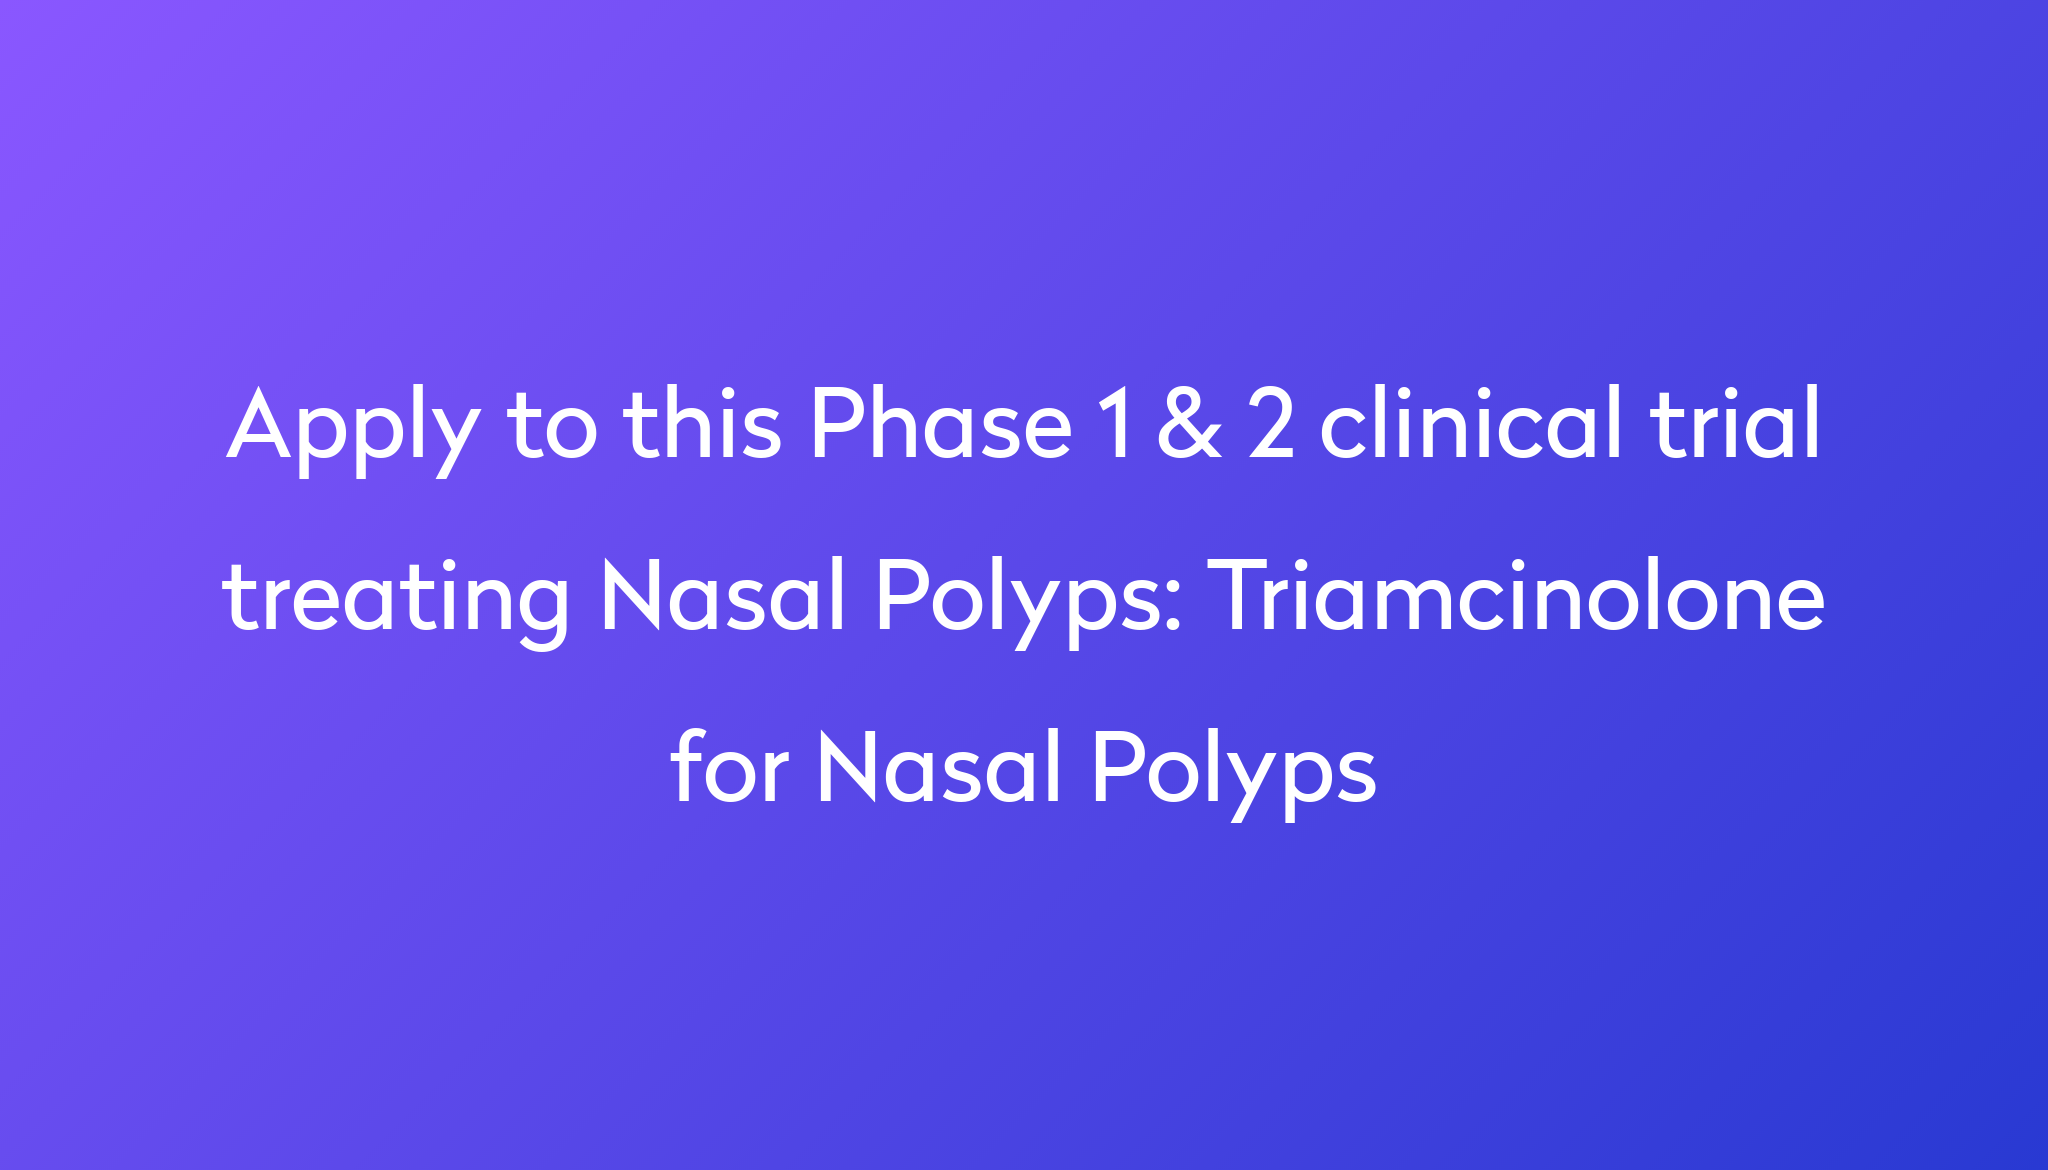 Triamcinolone for Nasal Polyps Clinical Trial 2022 | Power